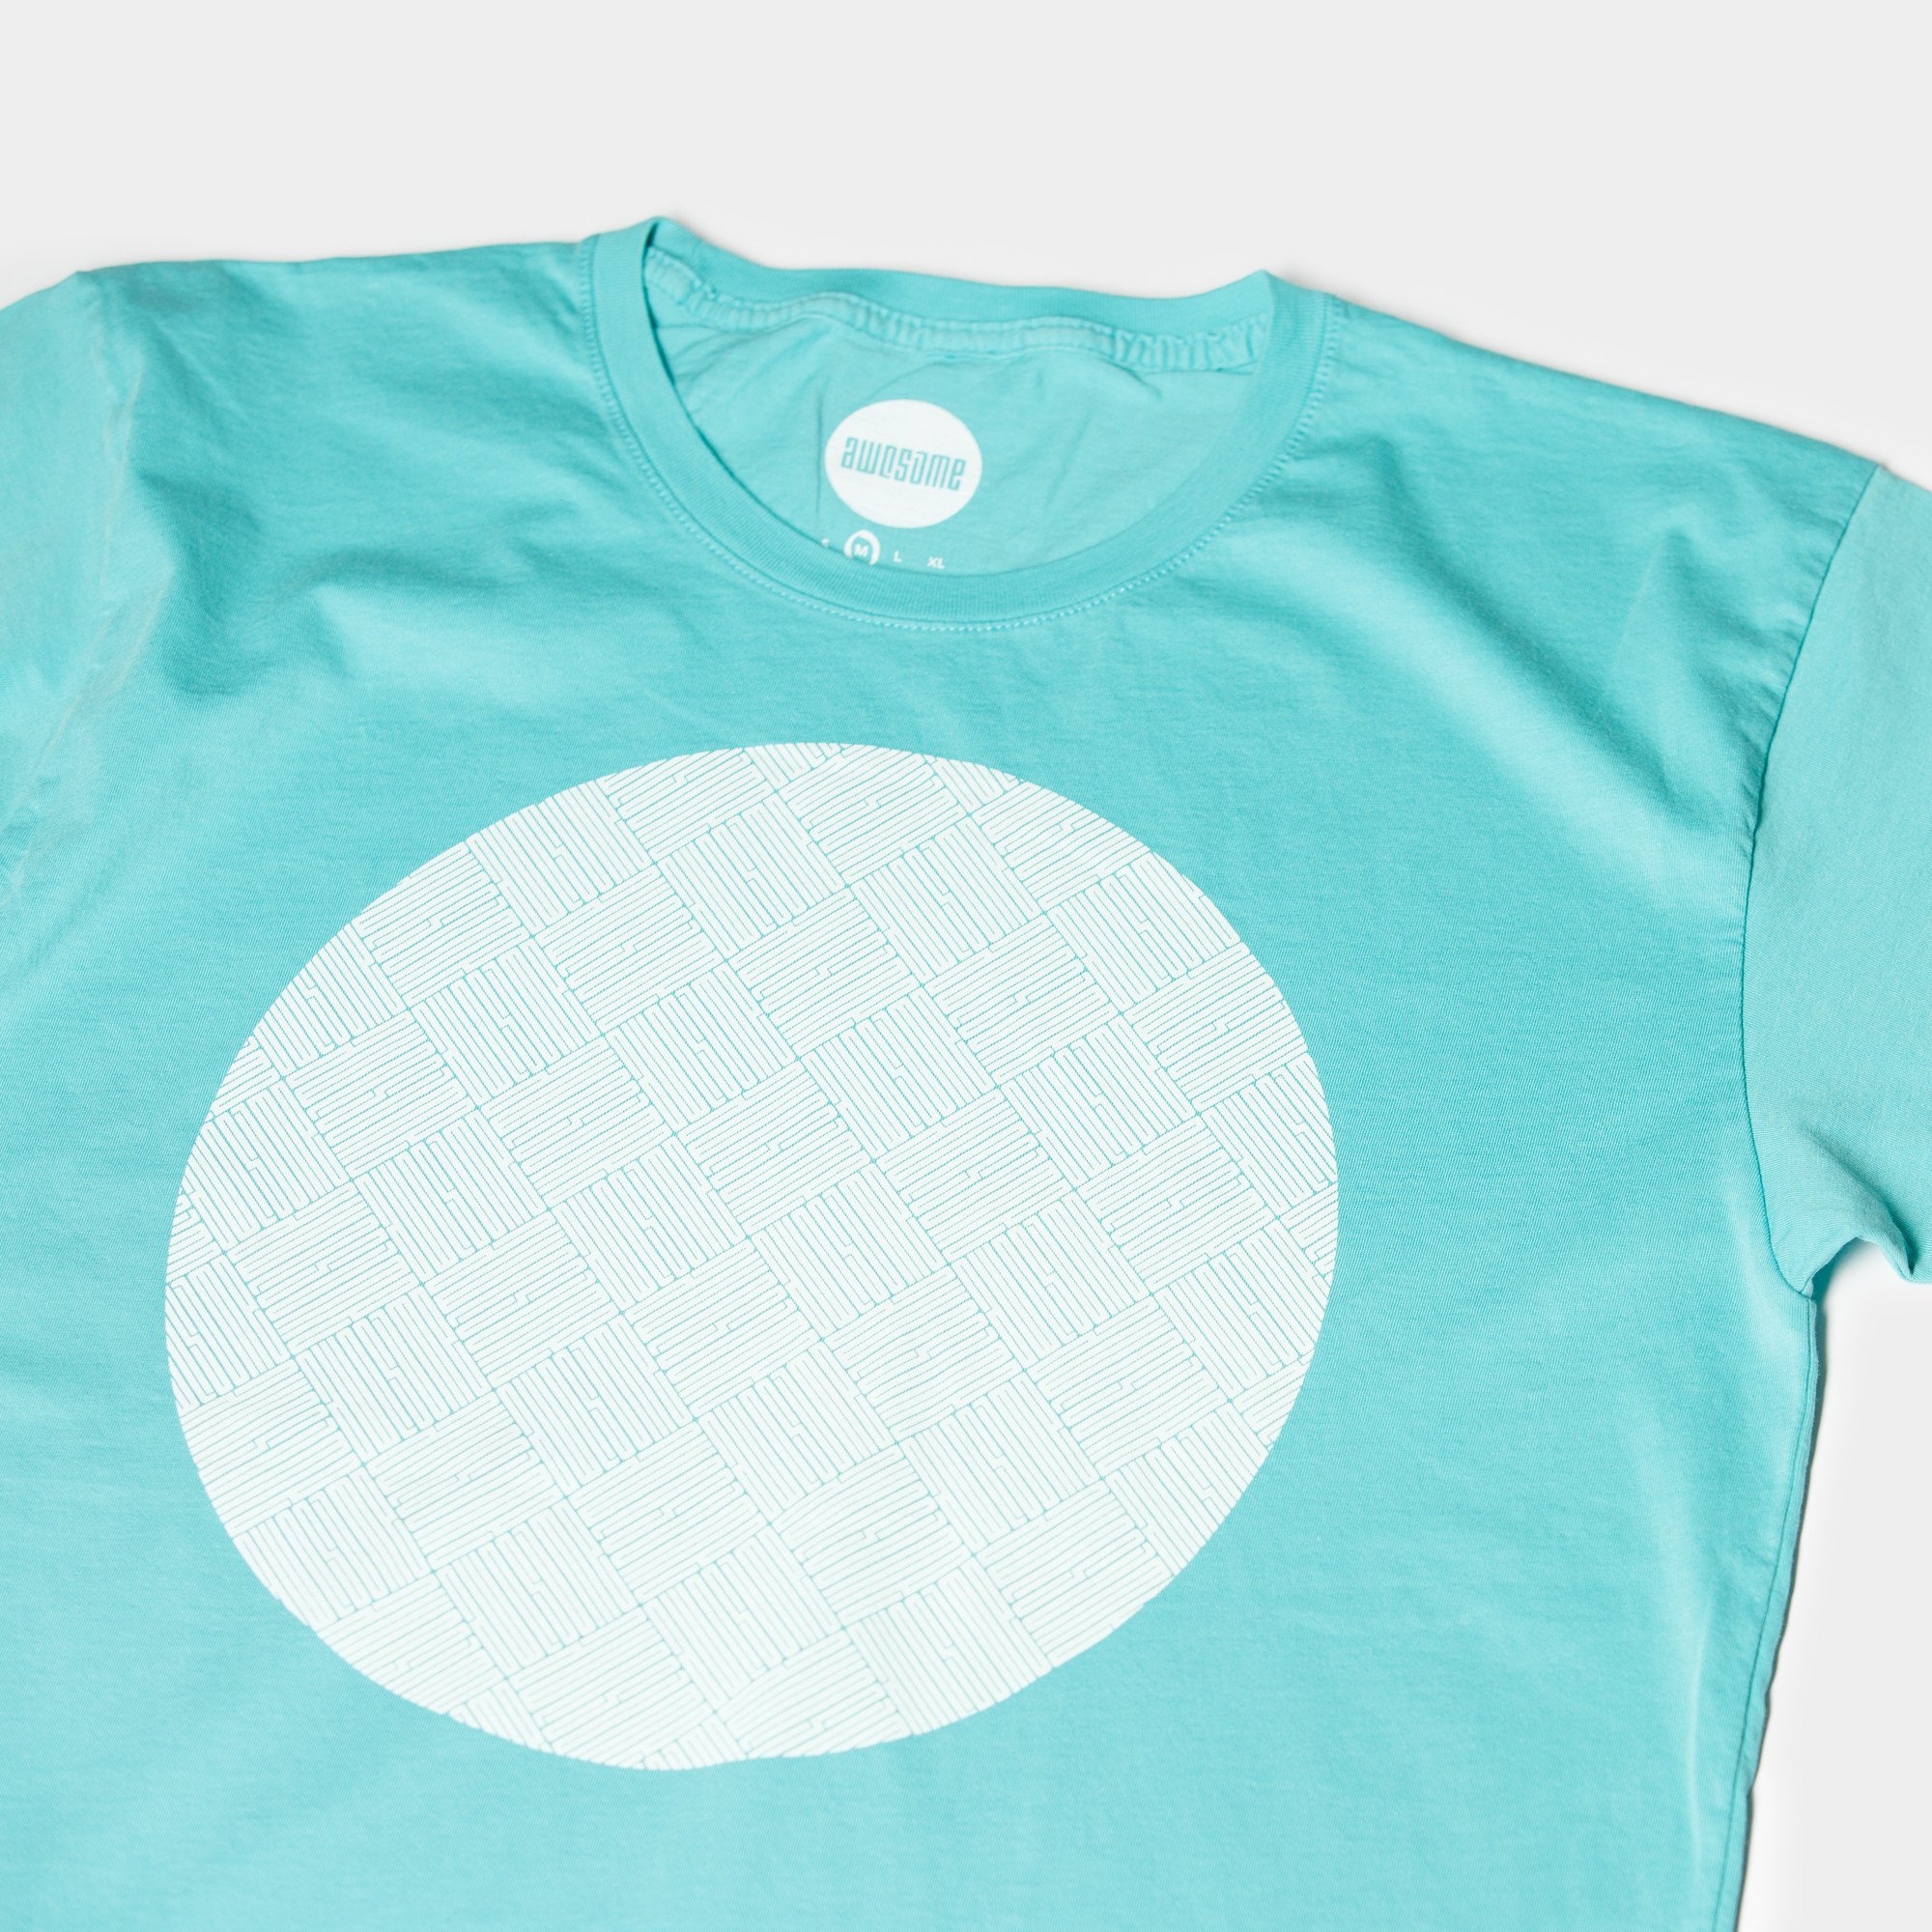 Awesome T-shirt Pattern Circle - Turquoise